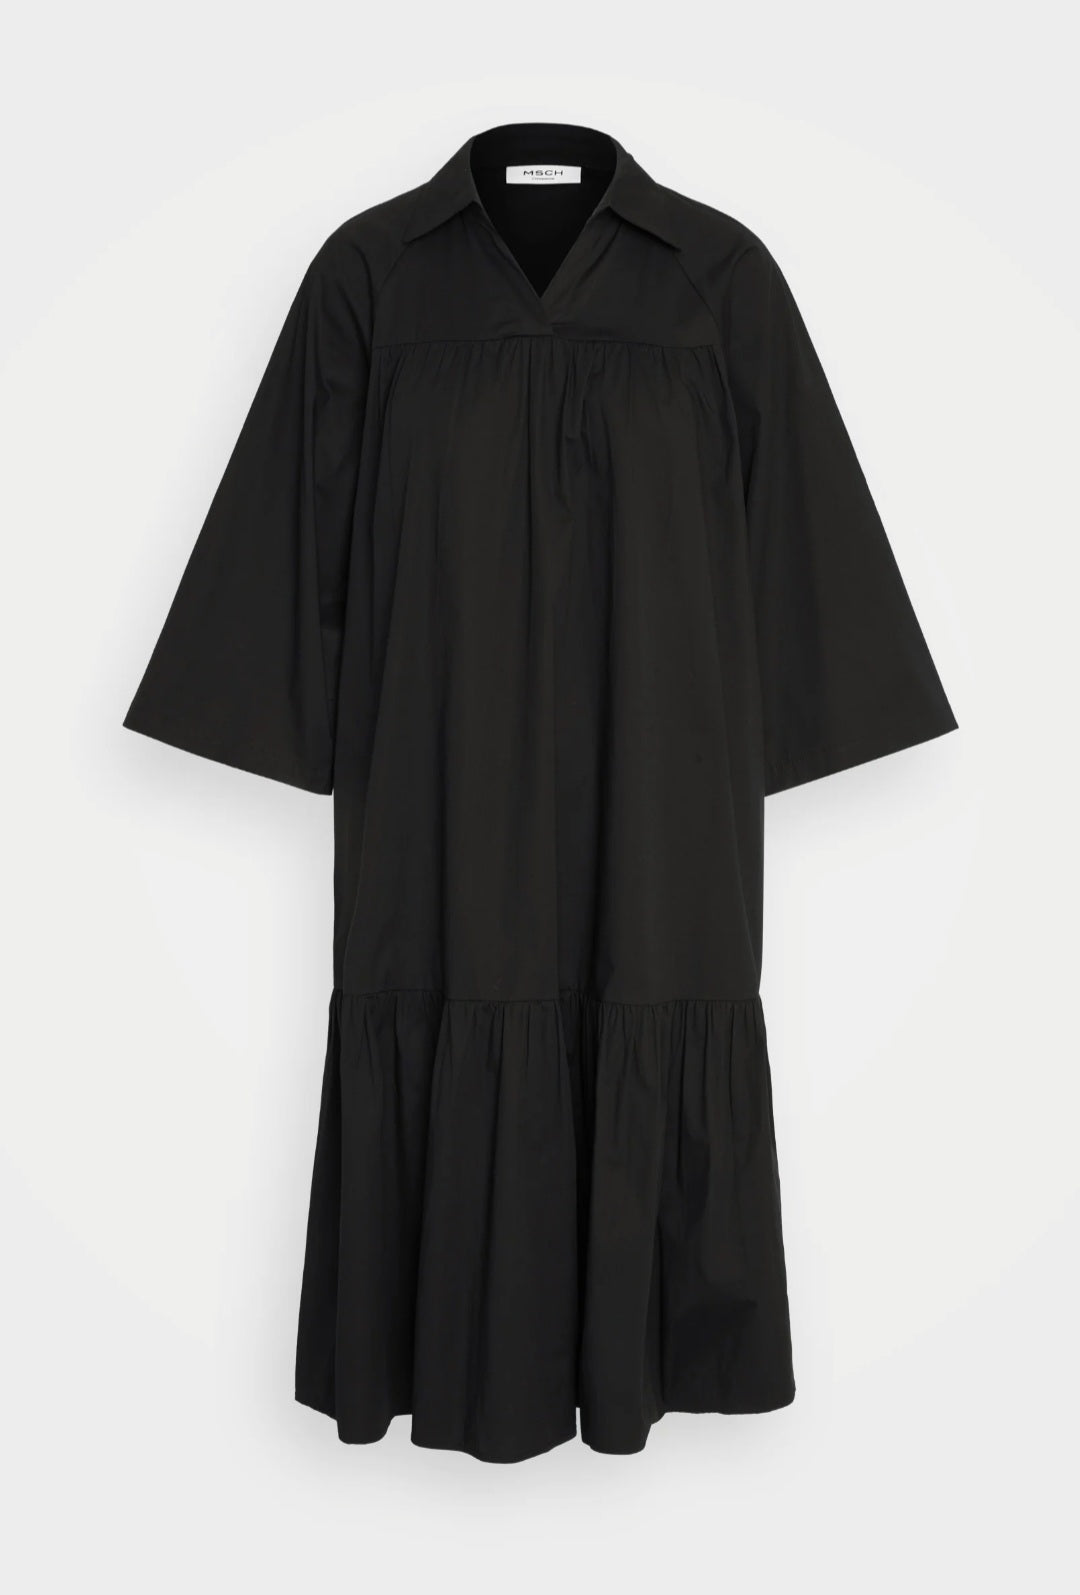 MSCHDanaya Cenilla 3/4 Dress - Black